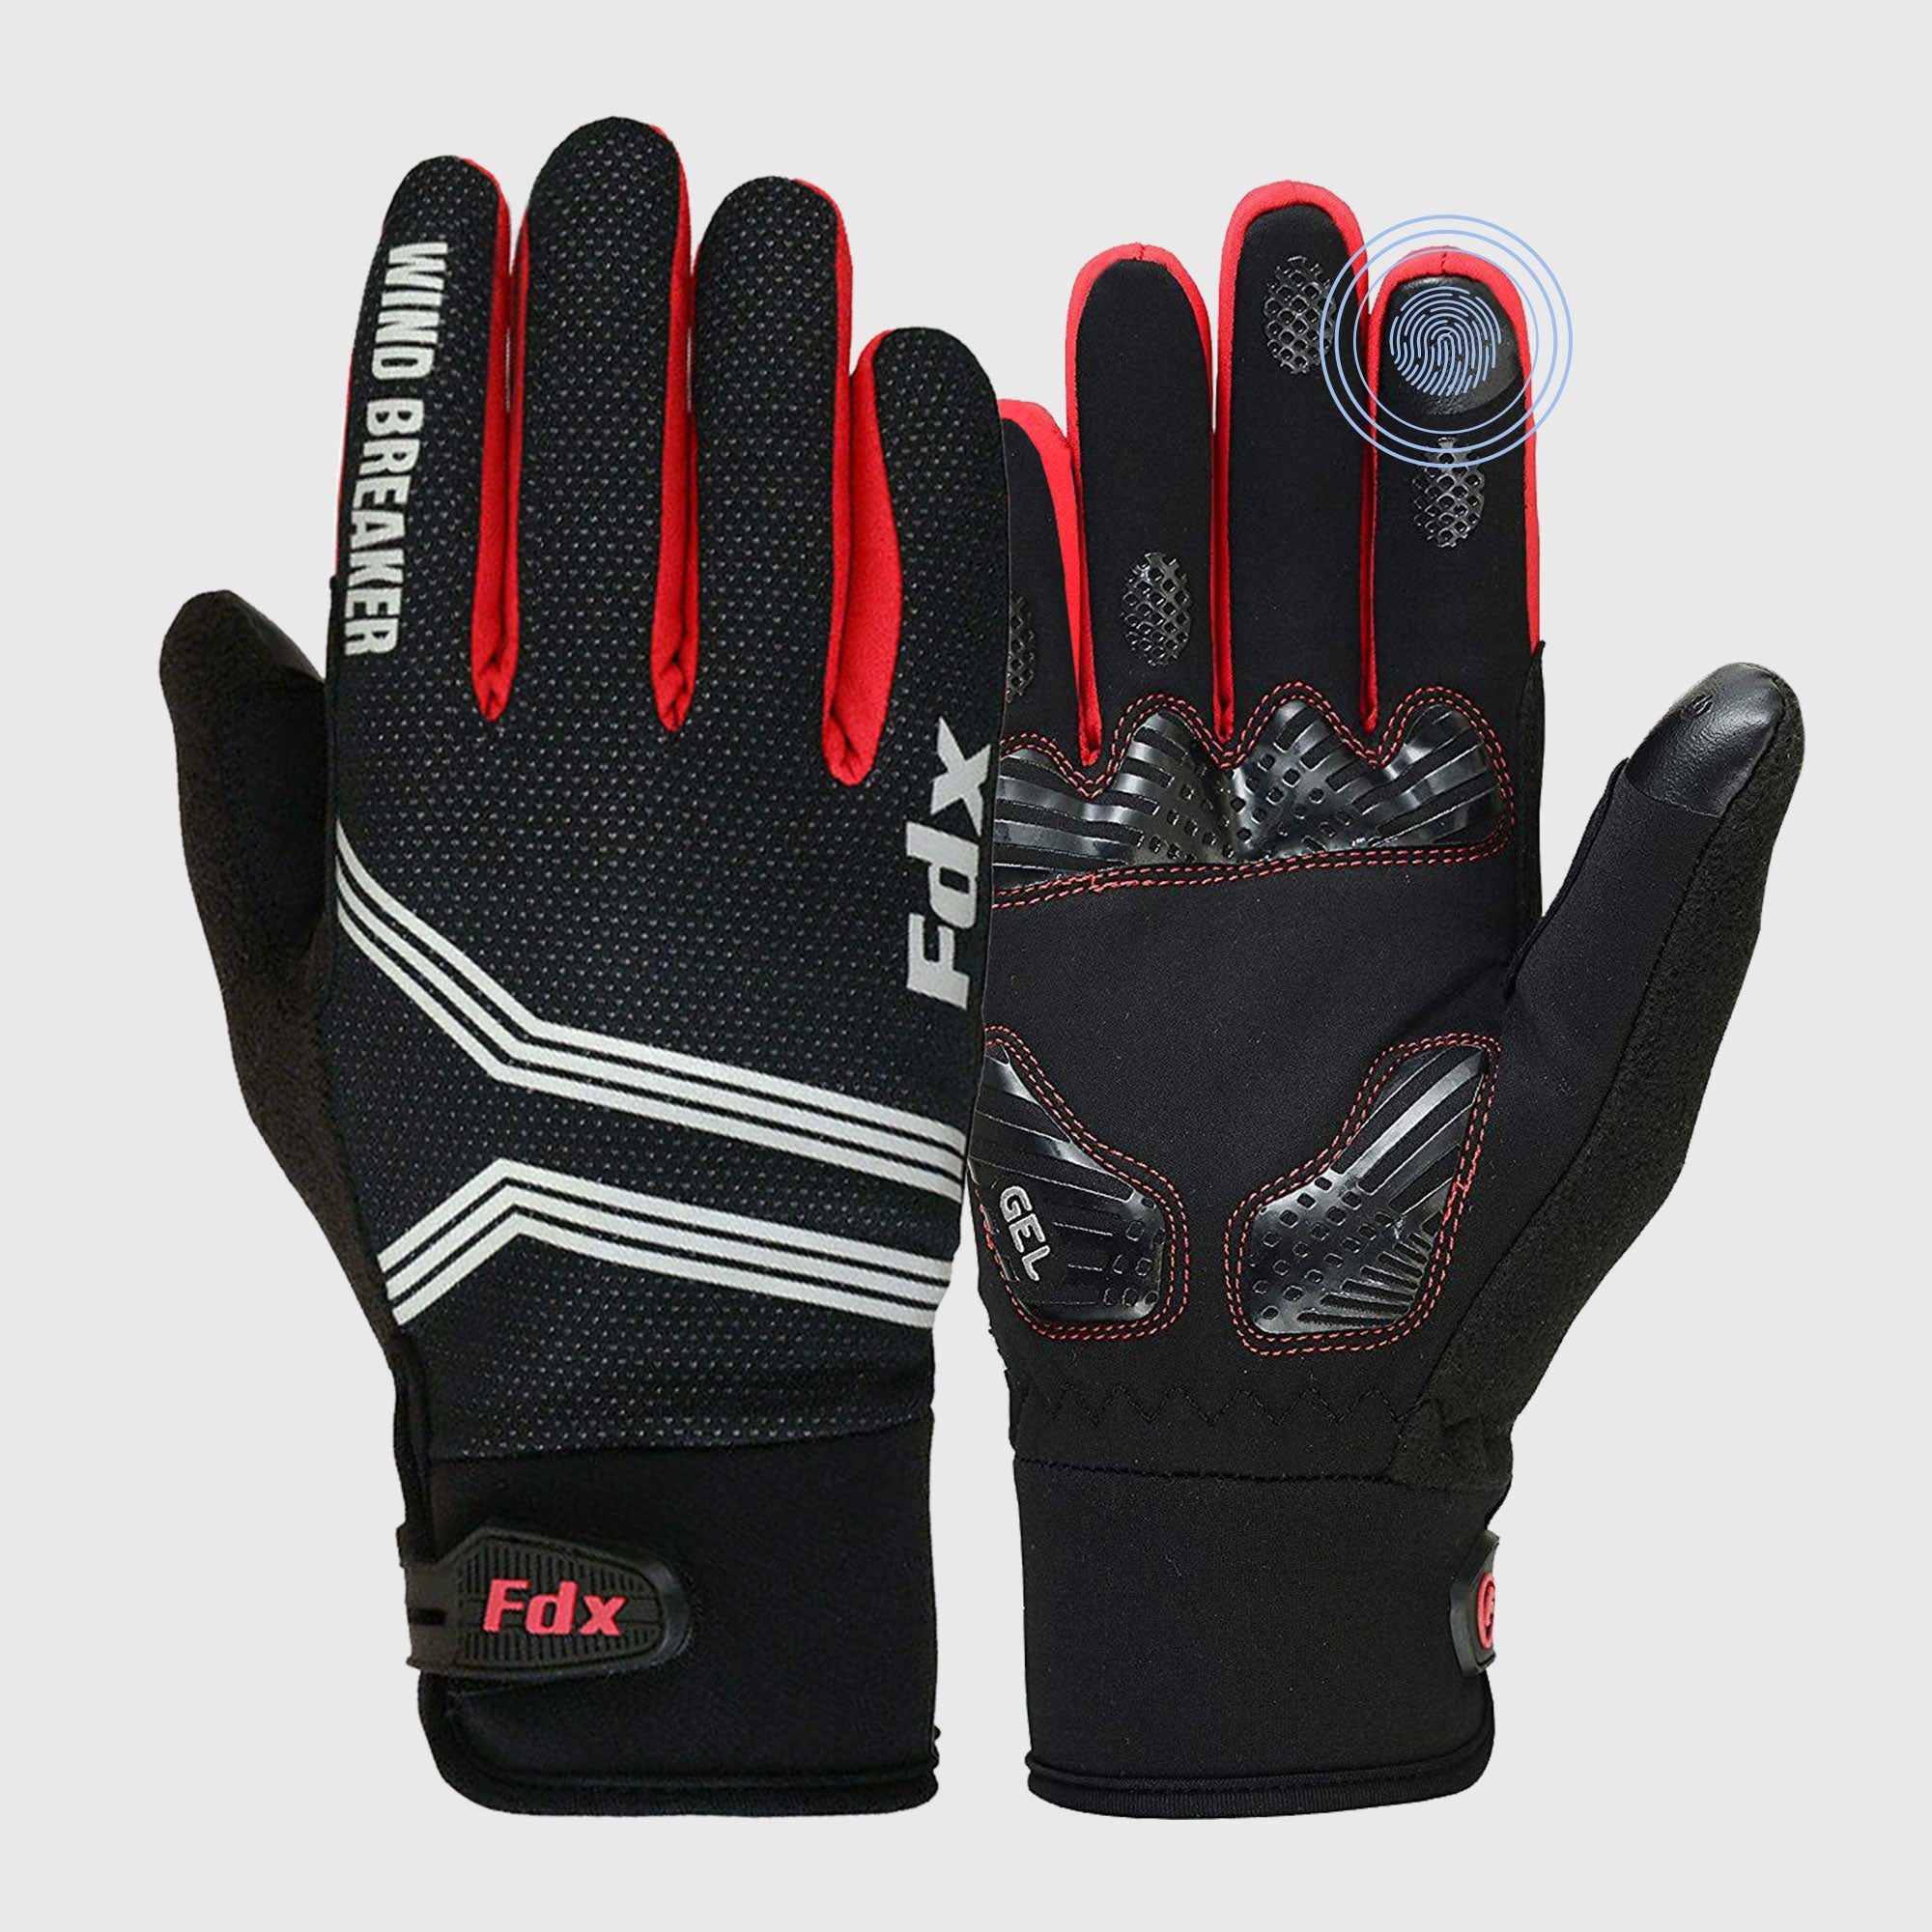 Fdx Dryrest Red Full Finger Gel Padded Winter Cycling Gloves